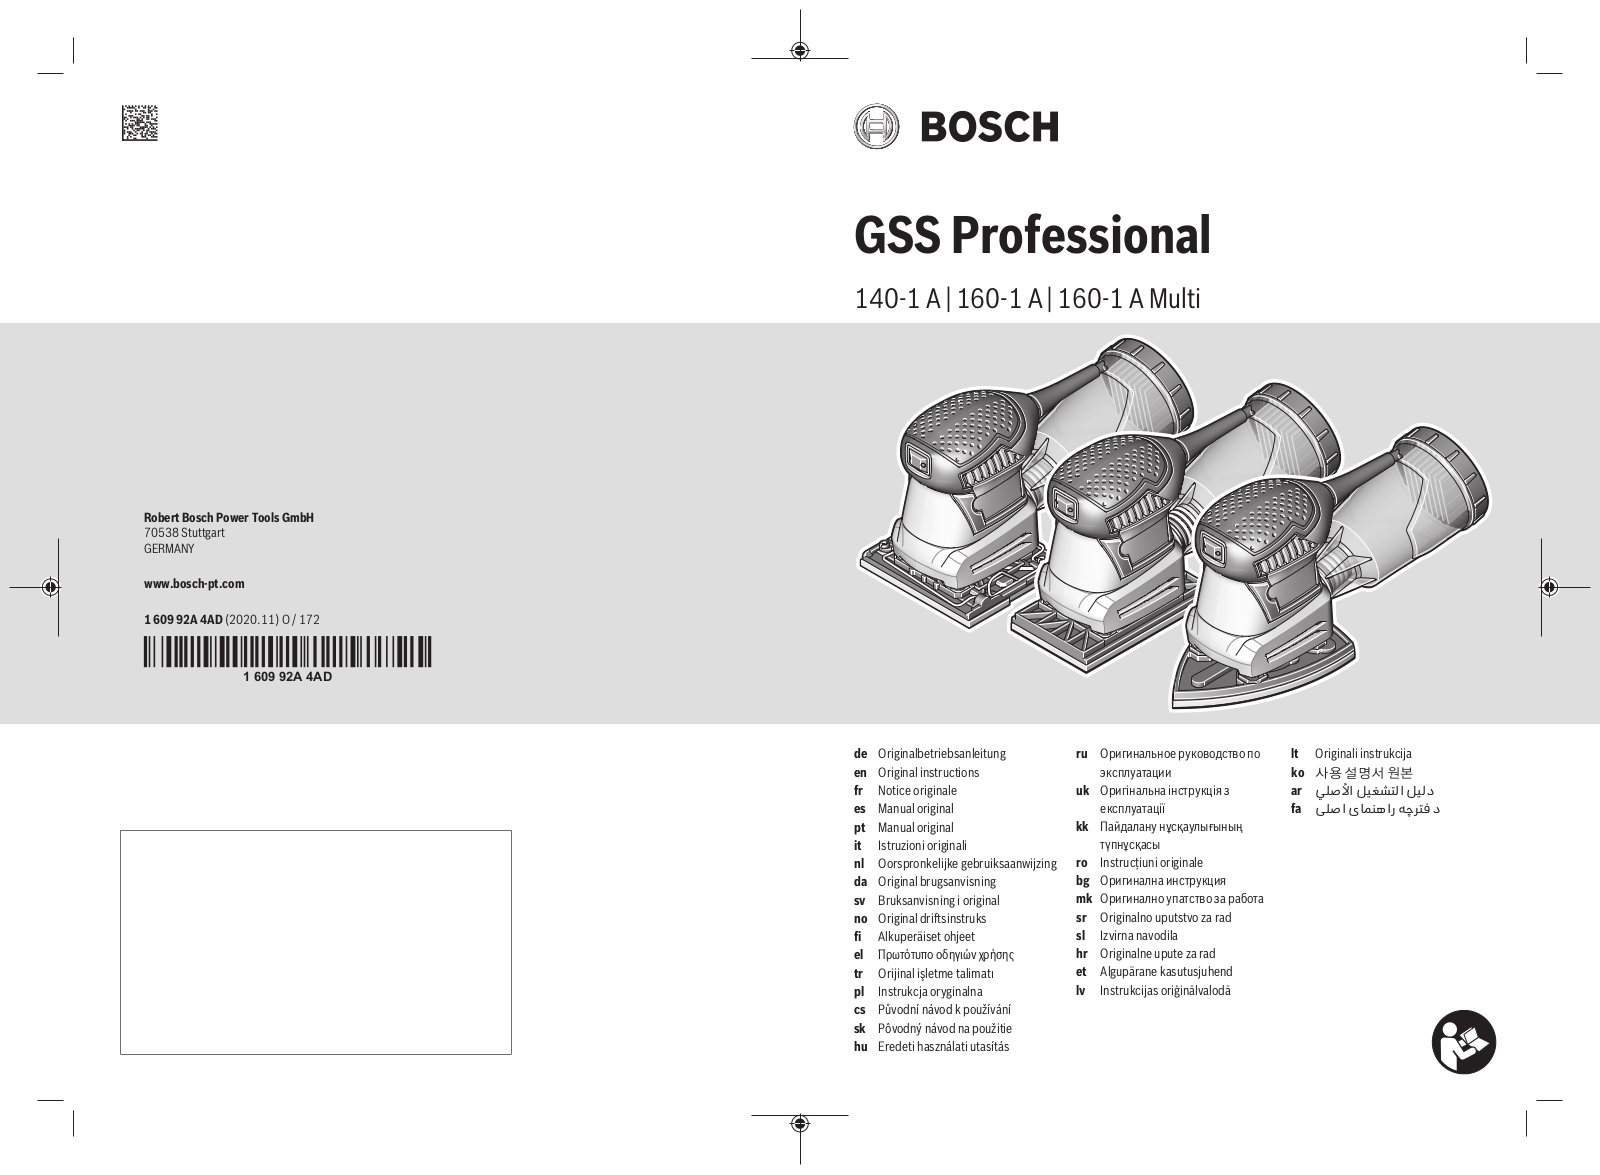 Bosch GSS 160-1 A Multi, GSS 140 -1 A, GSS 160 -1 A, GSS 160 multi User Manual